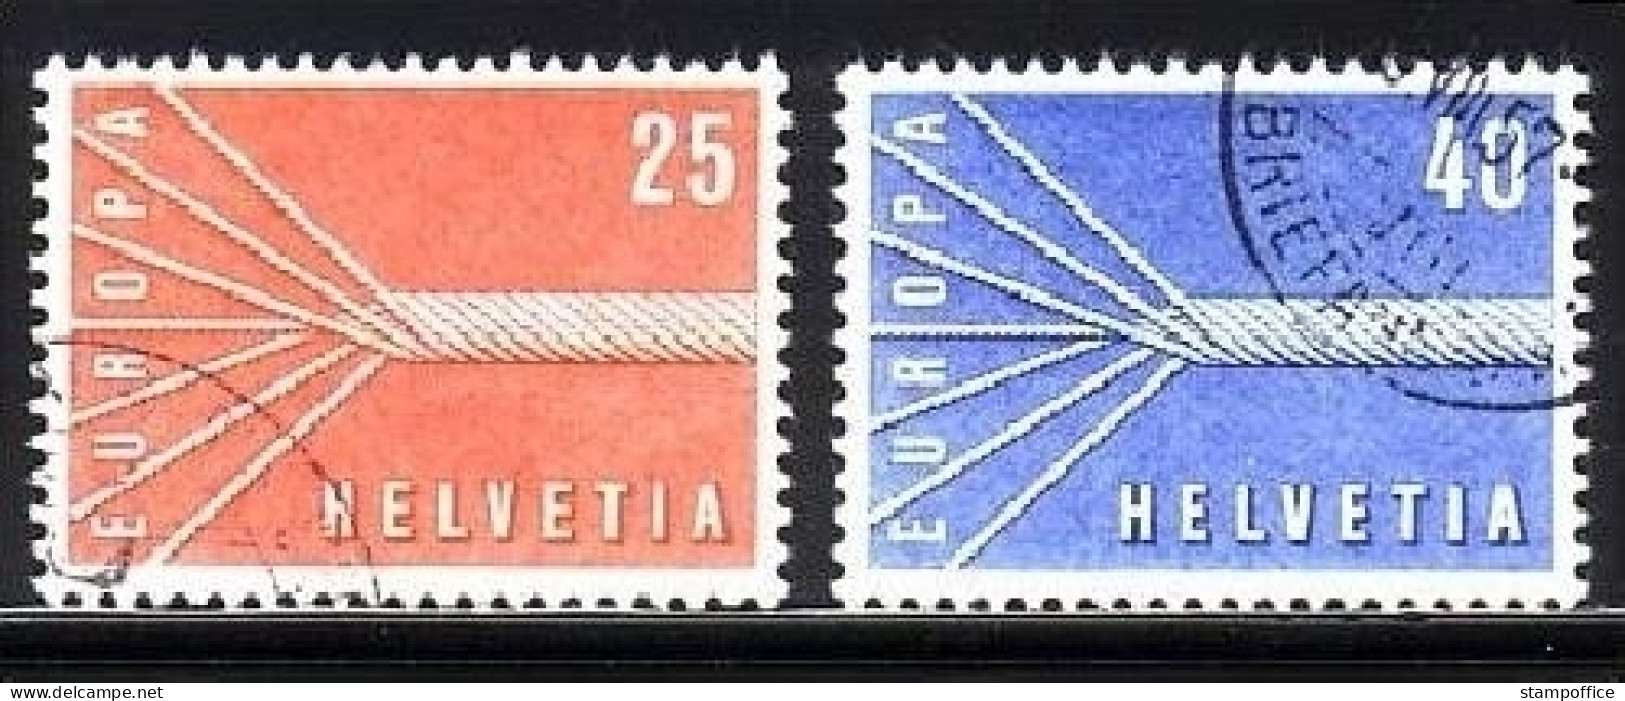 SCHWEIZ MI-NR. 646-647 GESTEMPELT(USED) EUROPA 1957 SIEBENADRIGES SEIL - 1957